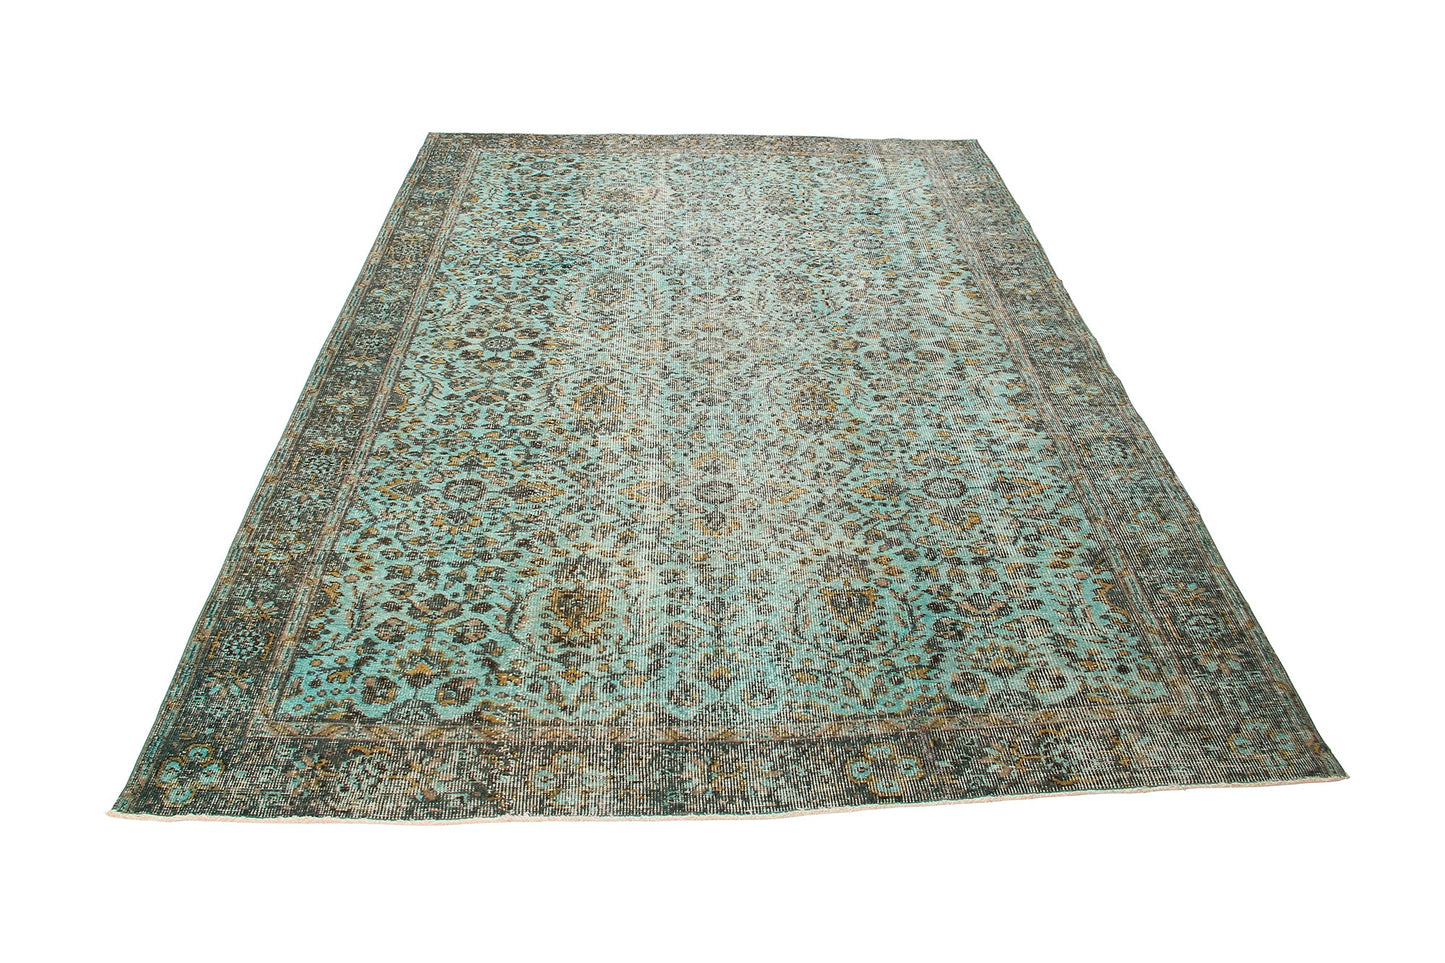 Handmade Turkish Vintage Wool Carpet Traditional Floral  Design product image #27556195696810